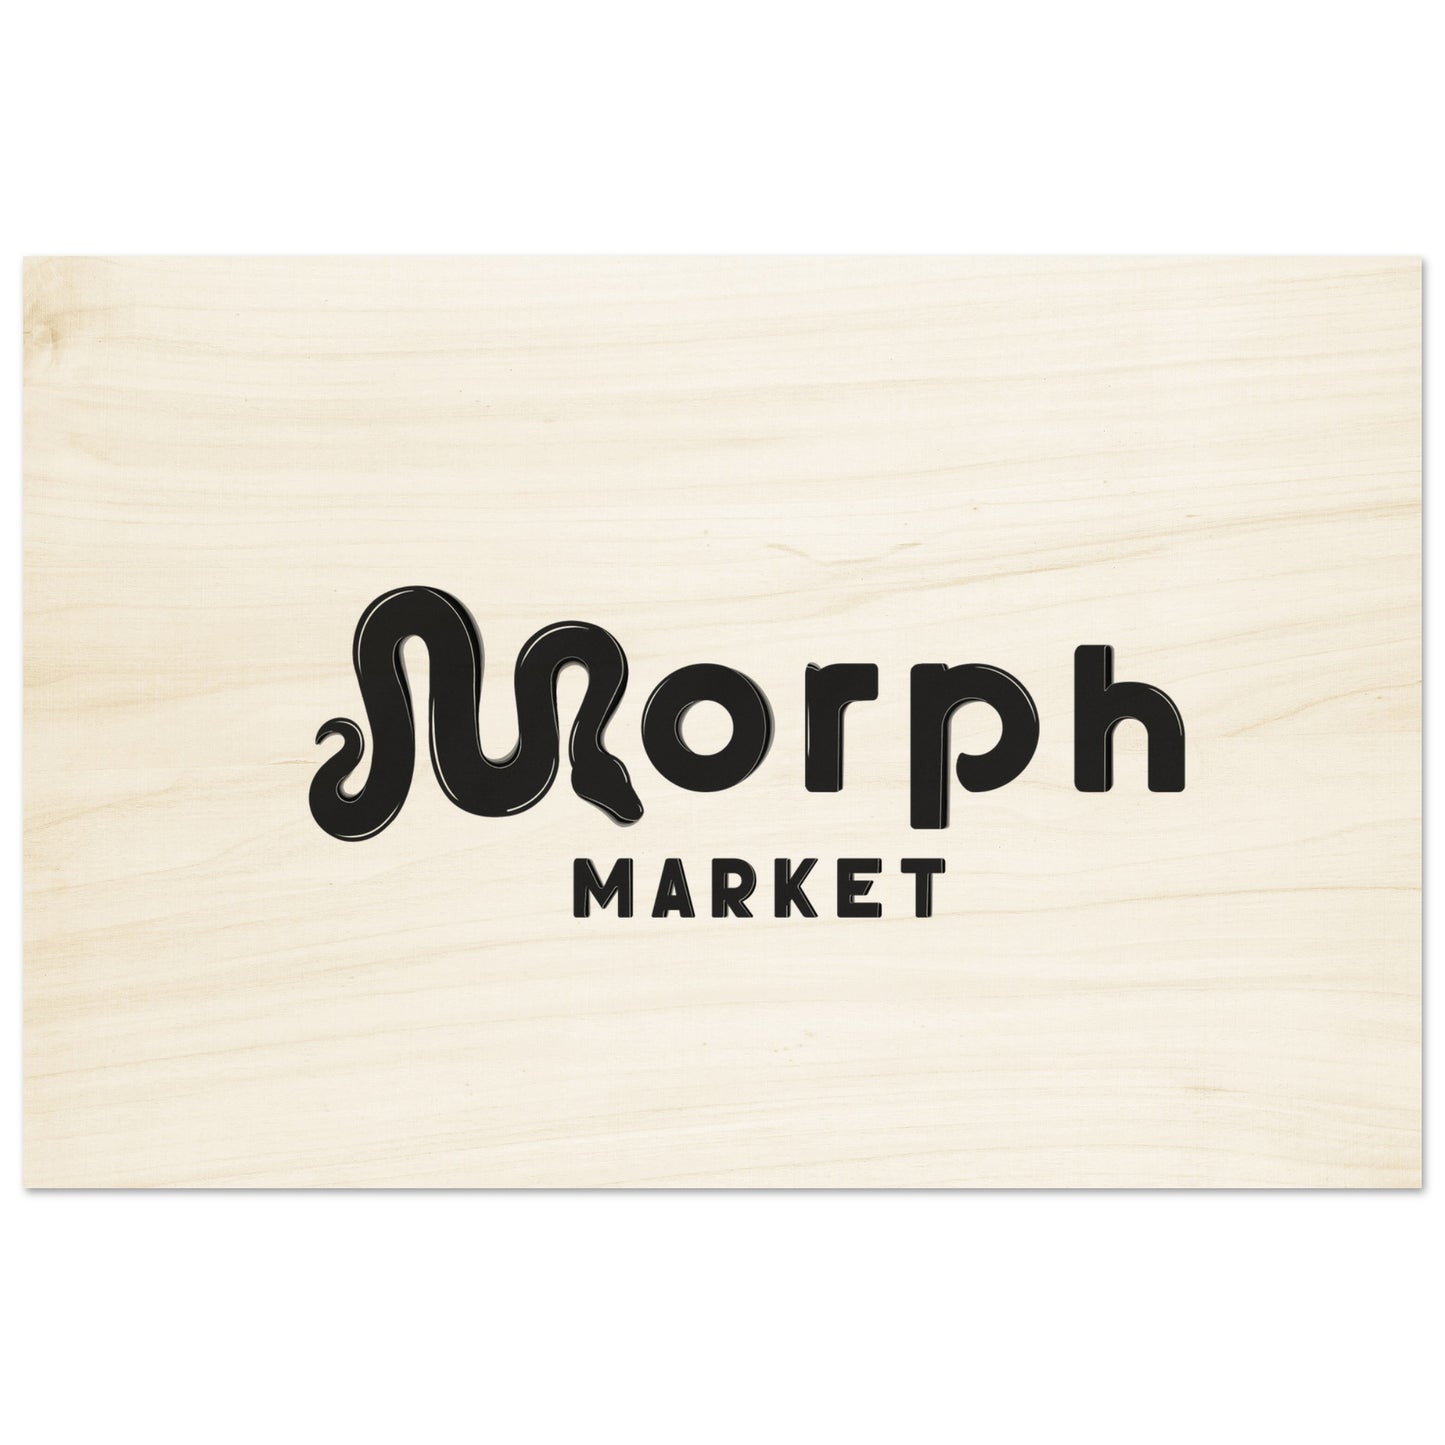 Morph Market (Dark) - Wood Prints